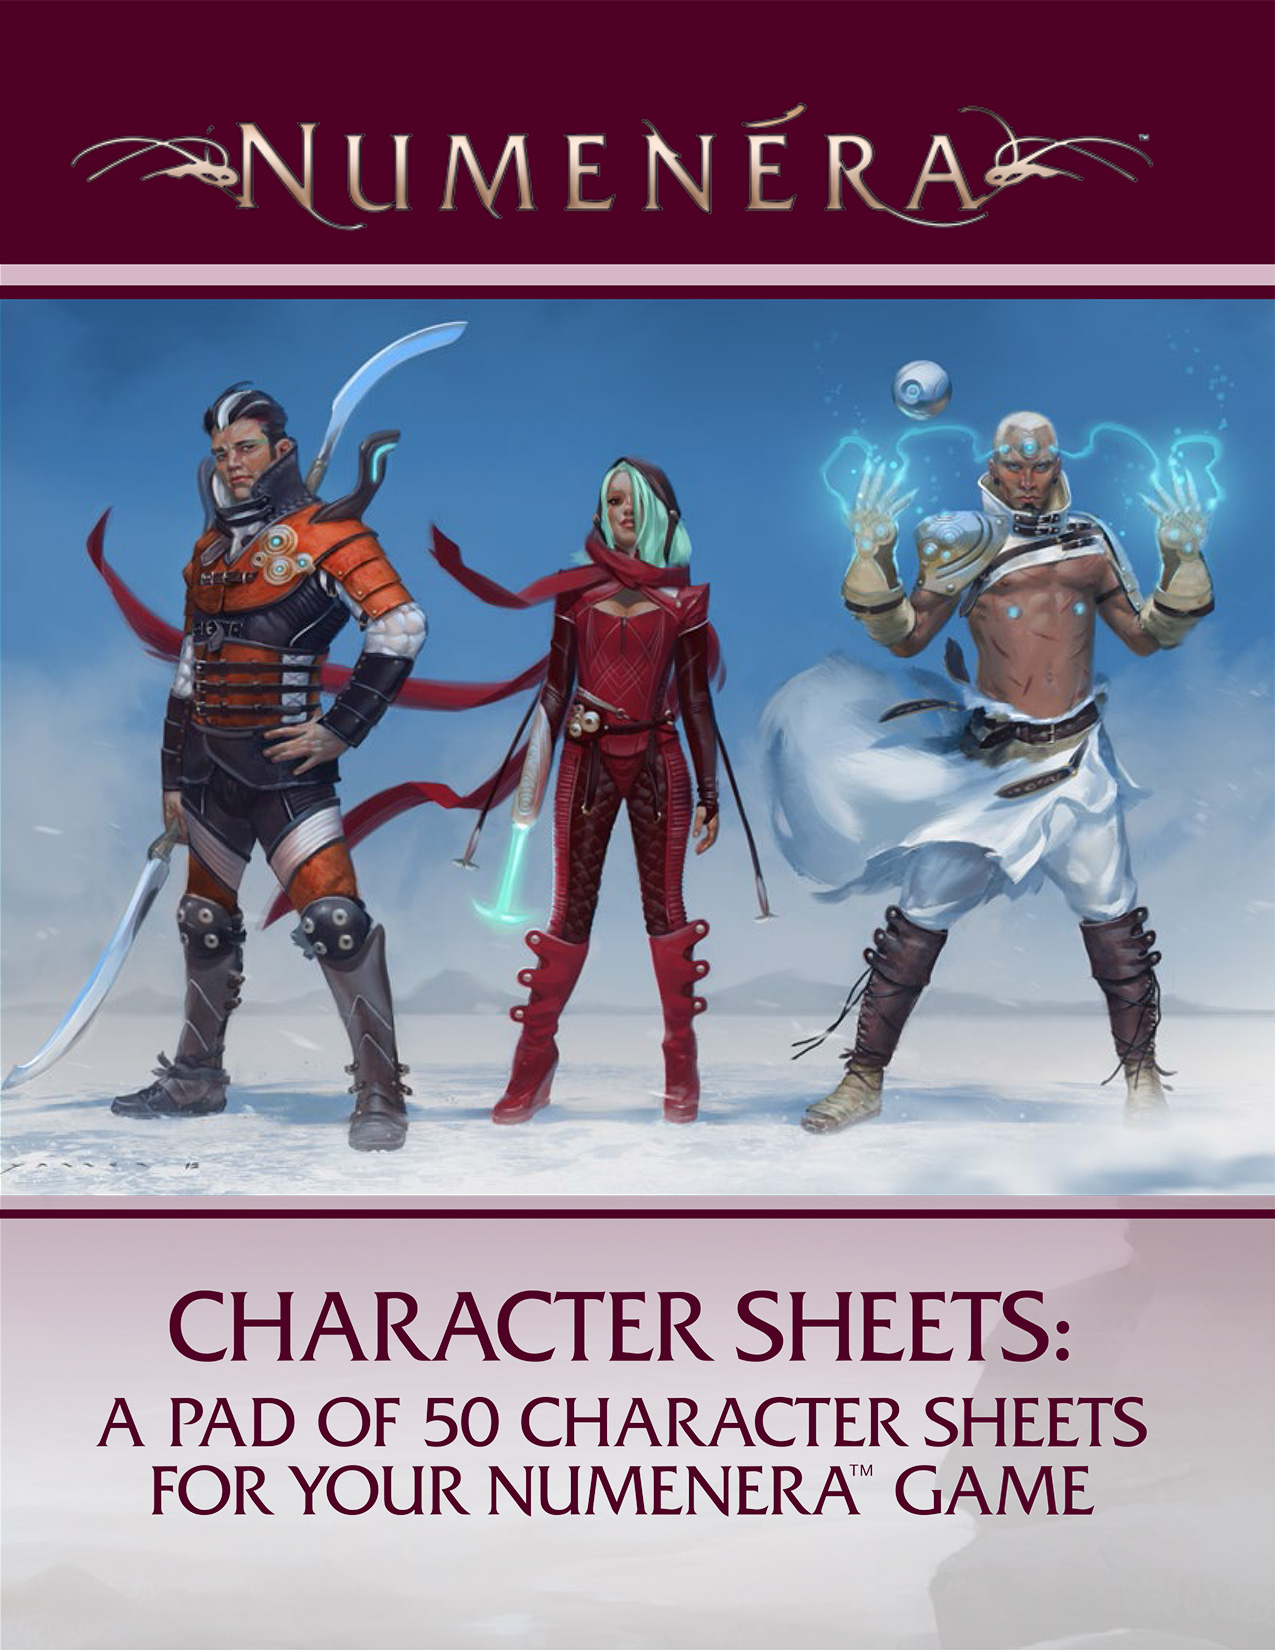 Numenera-Character-Sheets-2014-02-24.jpg